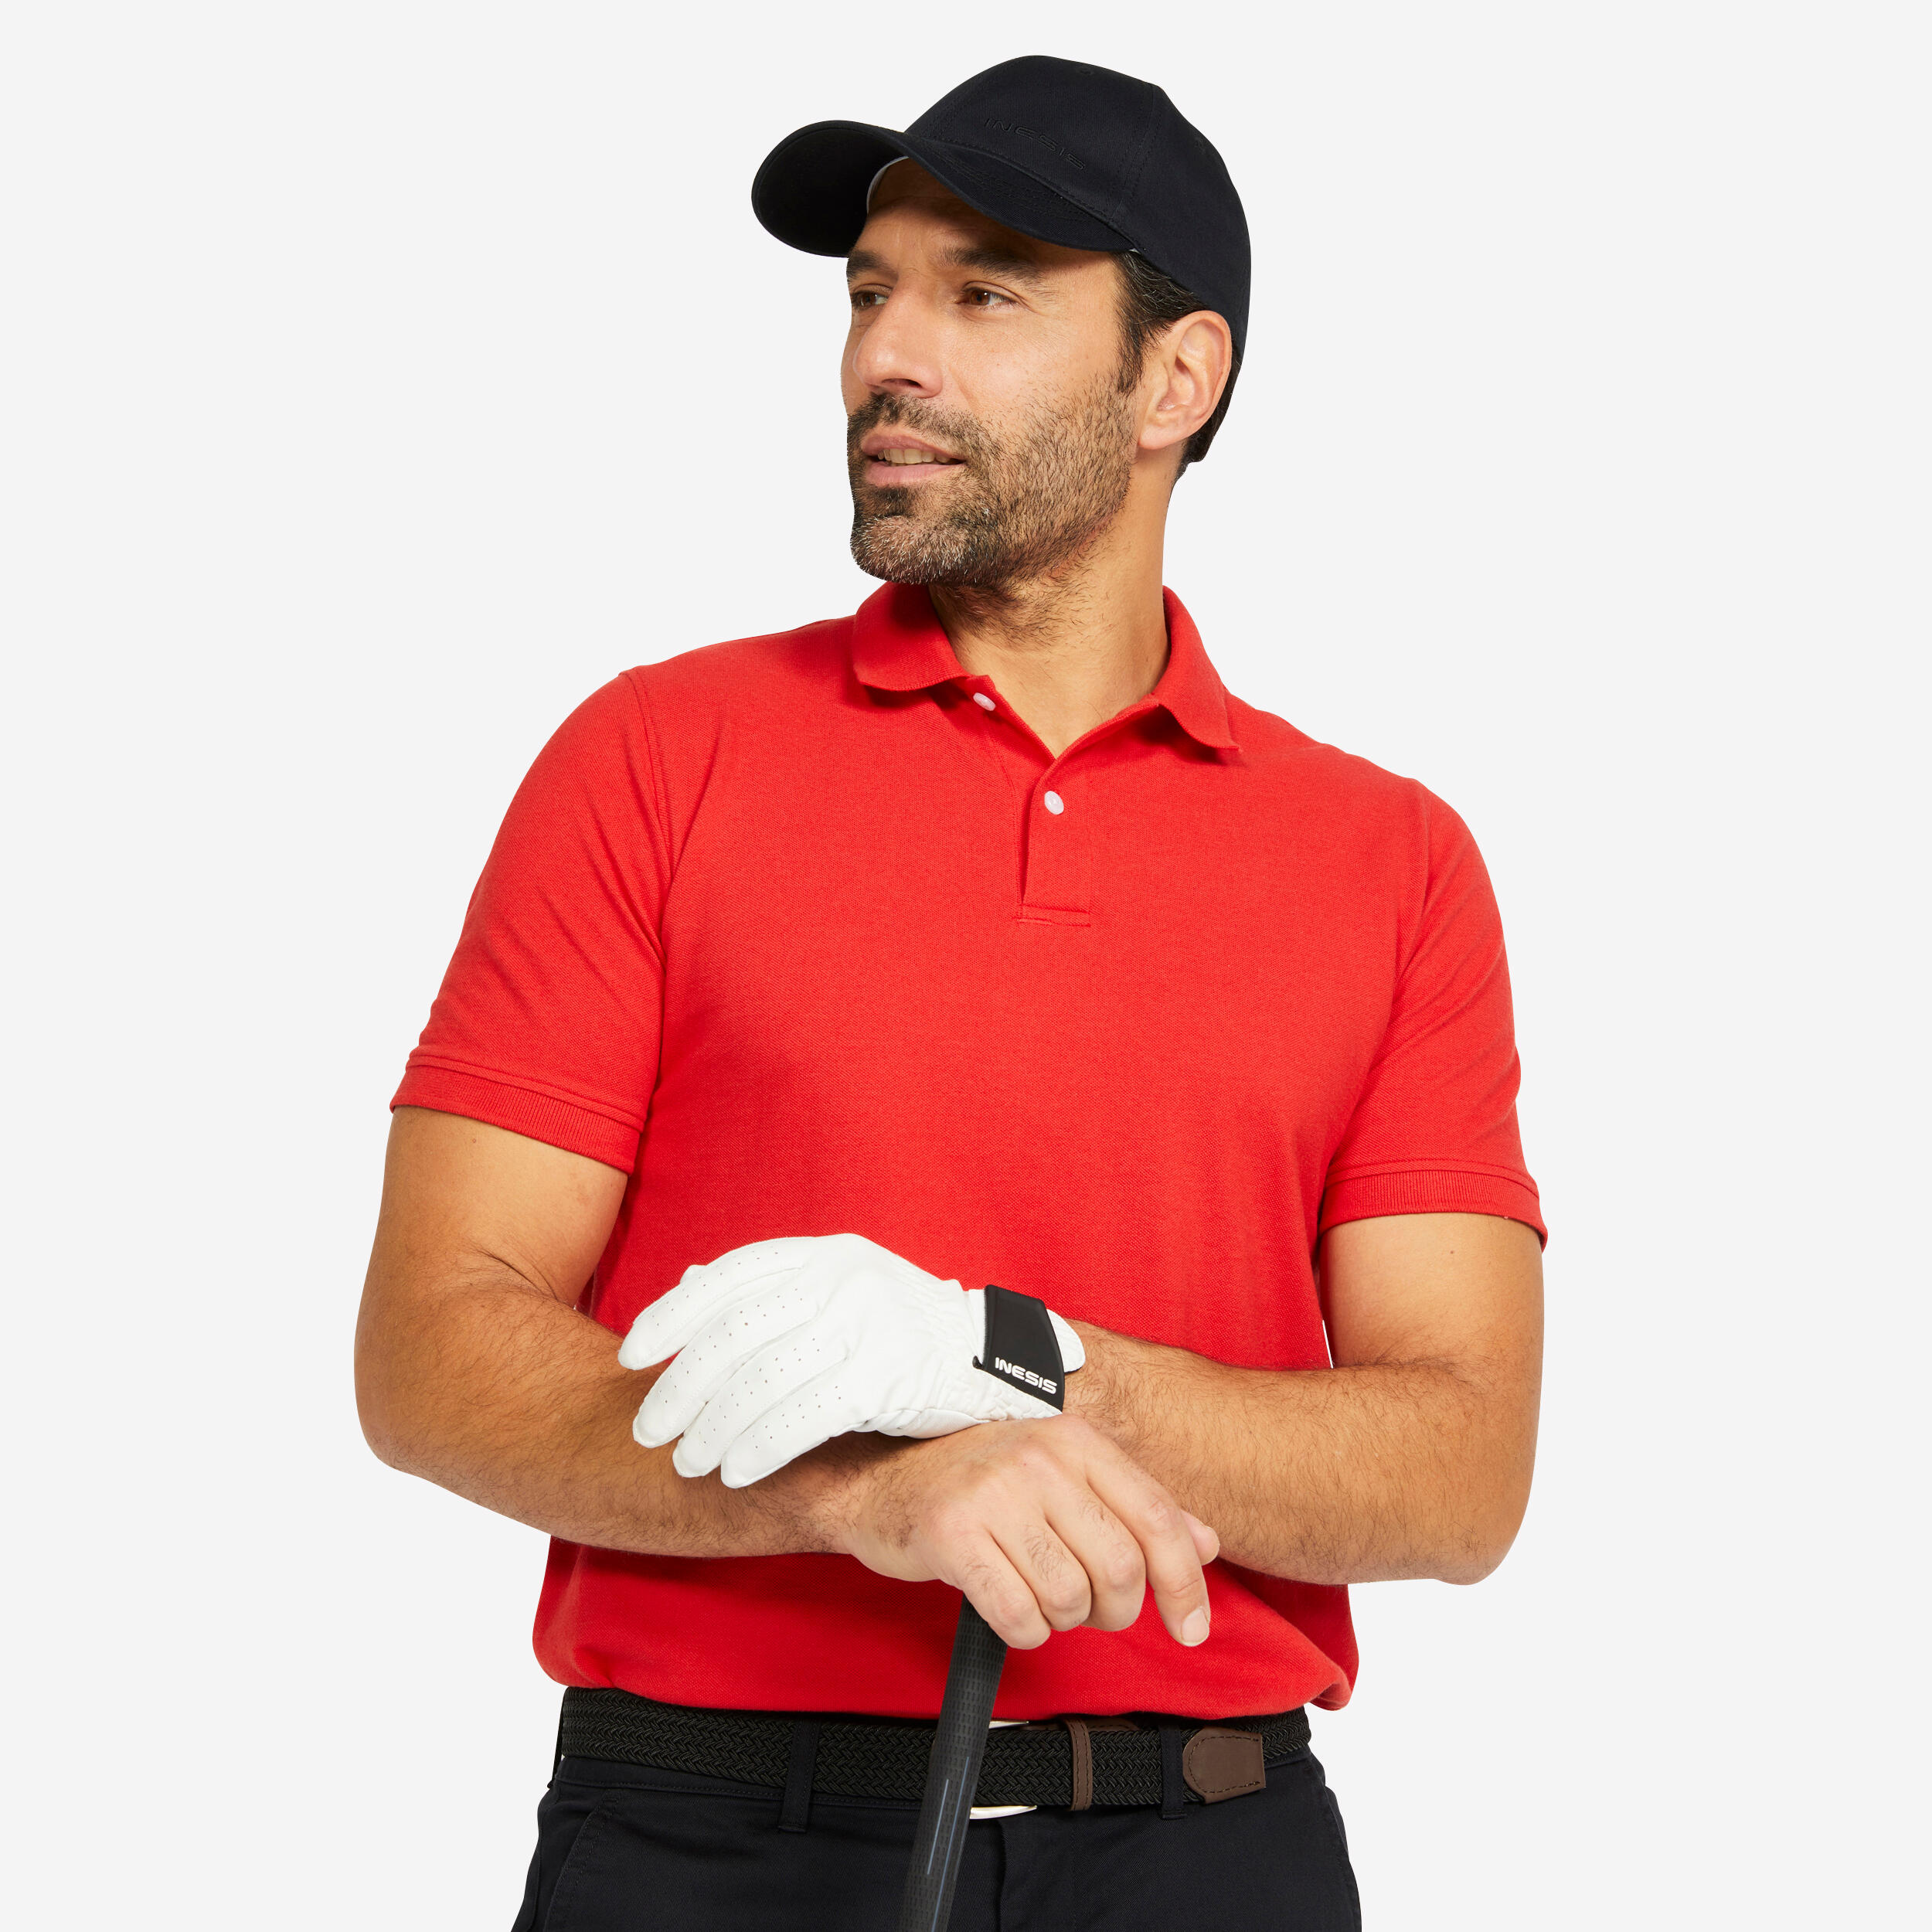 INESIS Men's short-sleeved golf polo shirt - MW500 red